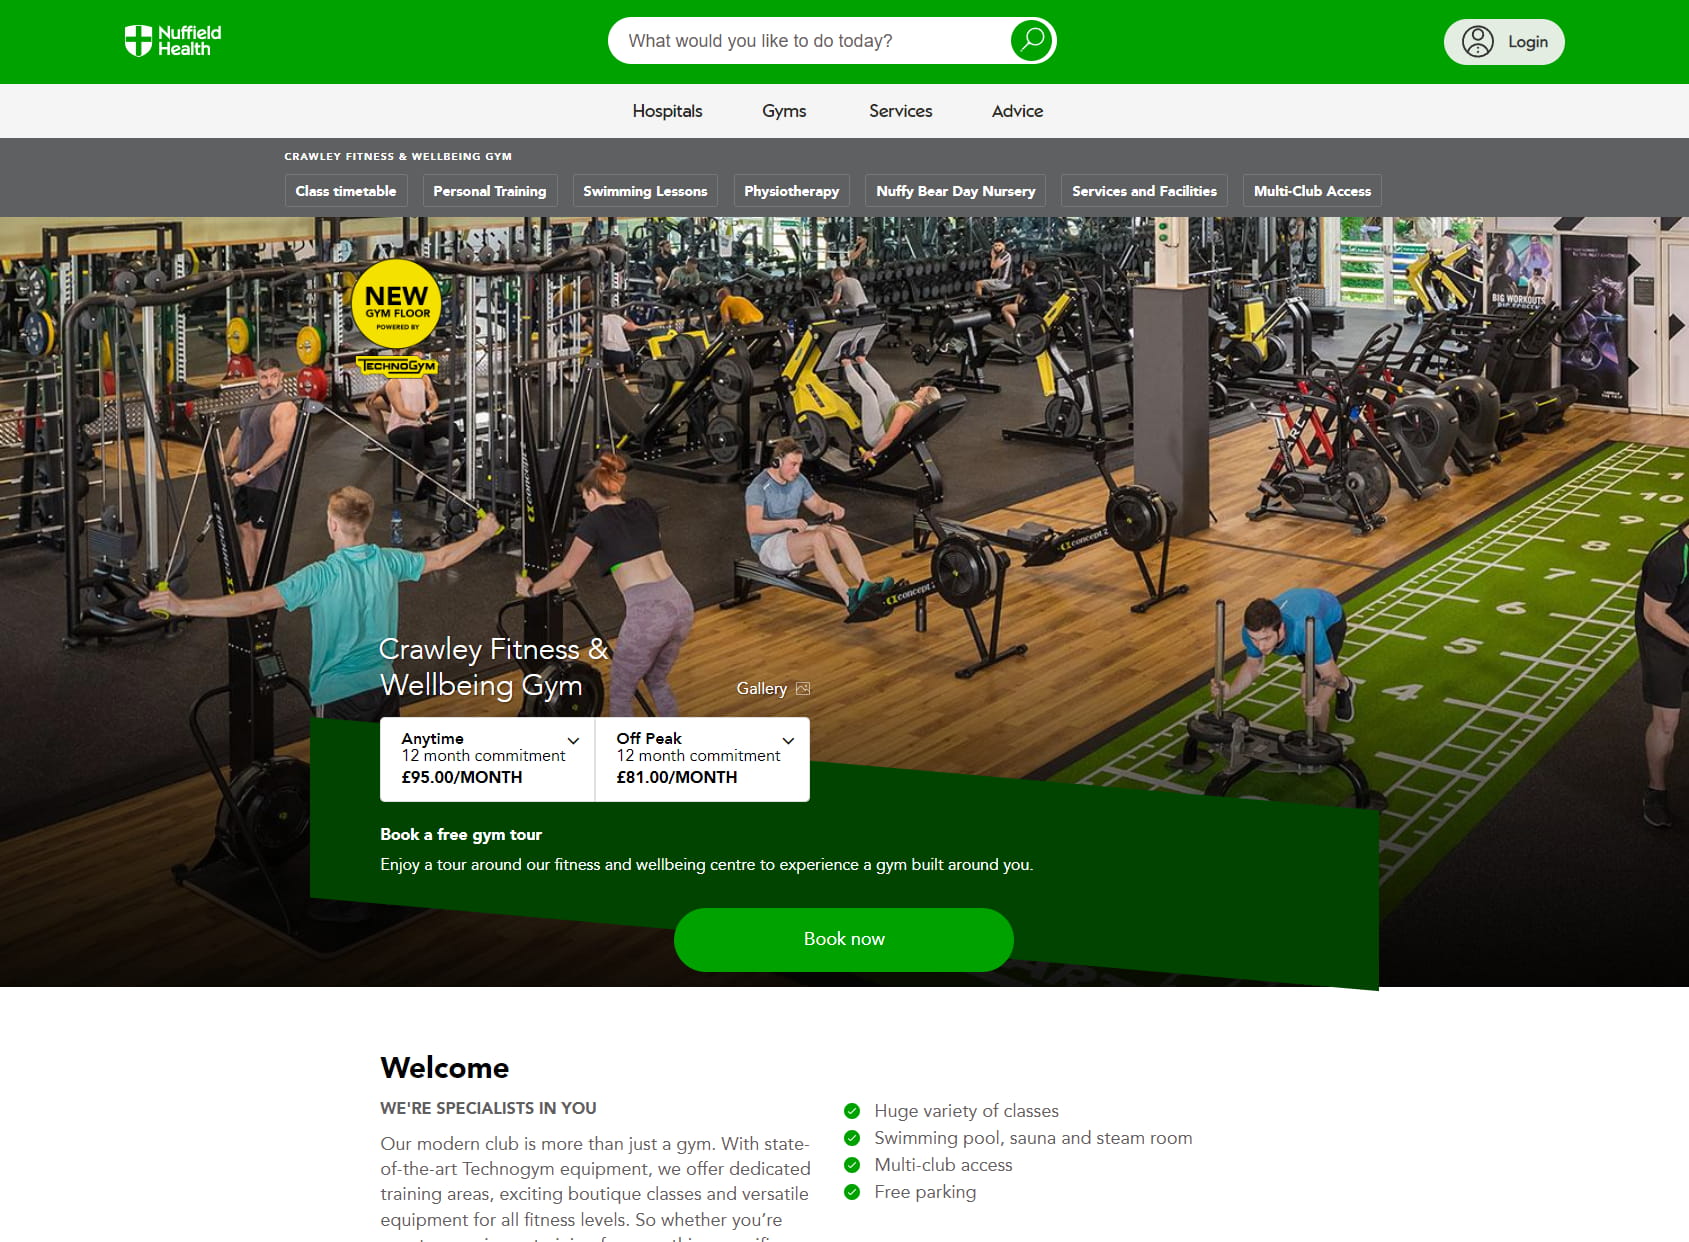 Nuffield Health Crawley Fitness & Wellbeing Gym